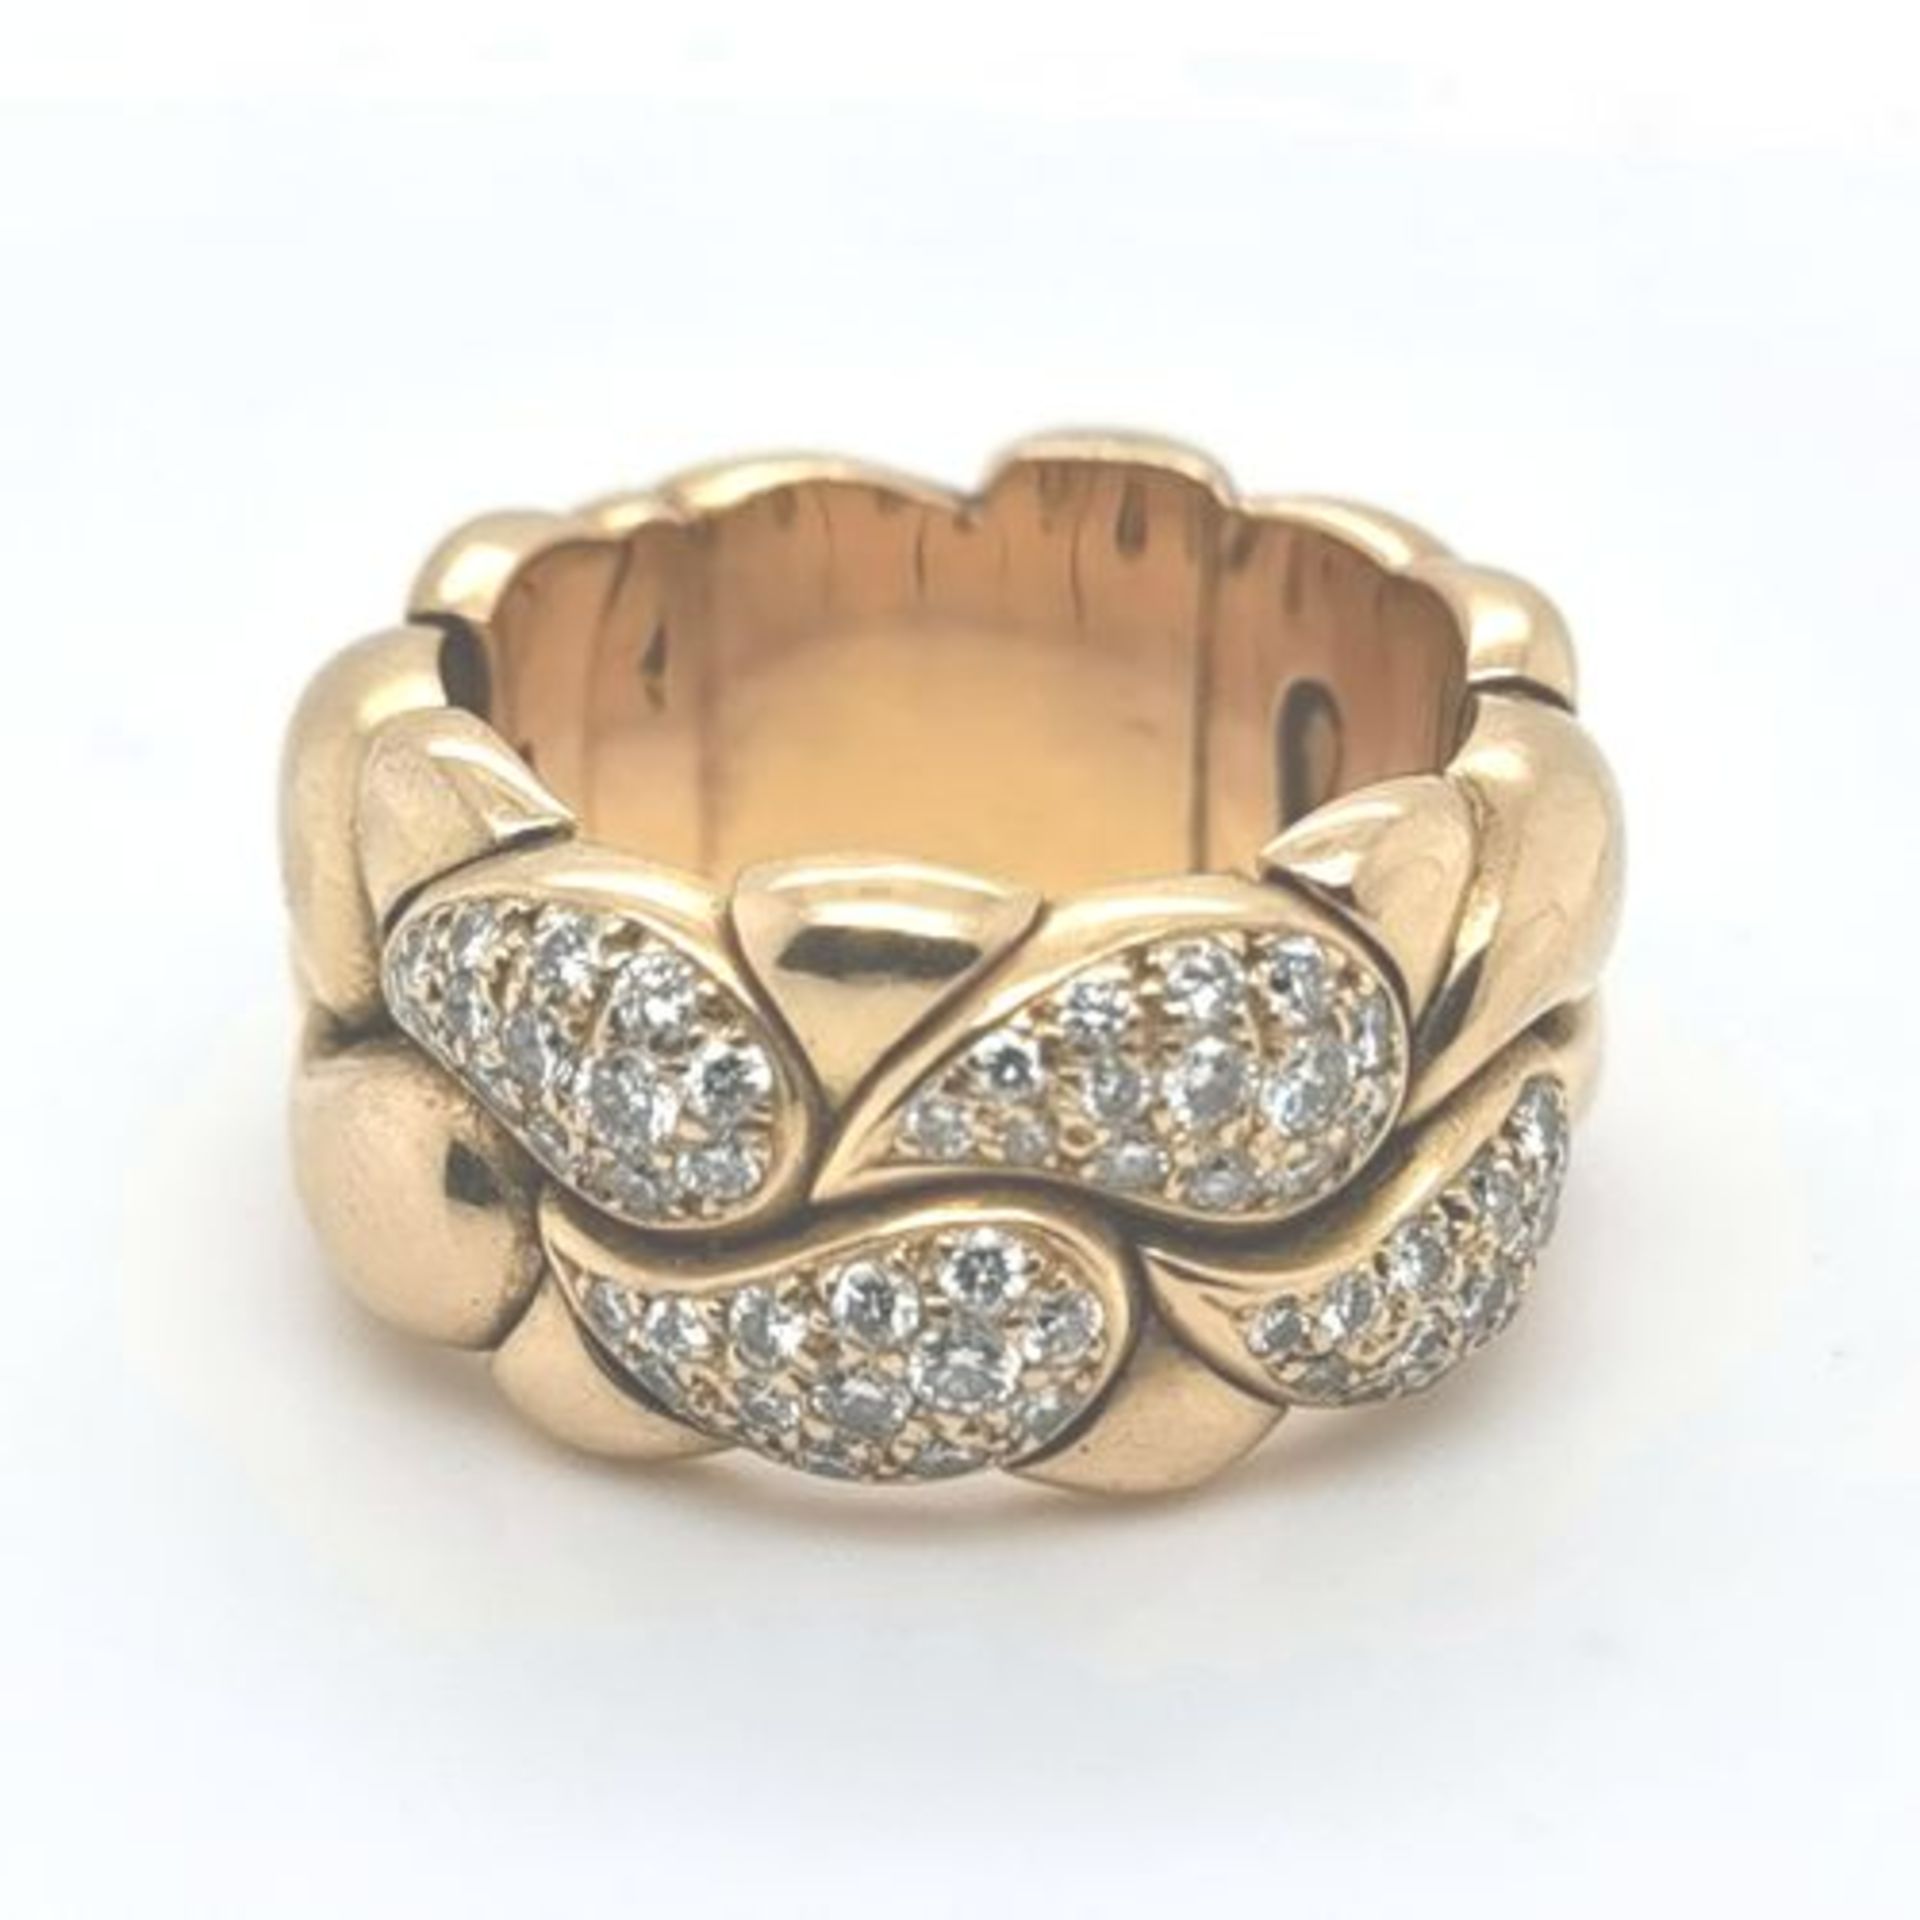 Chopard-Ring, 750 GG 23 Gramm Brill.,